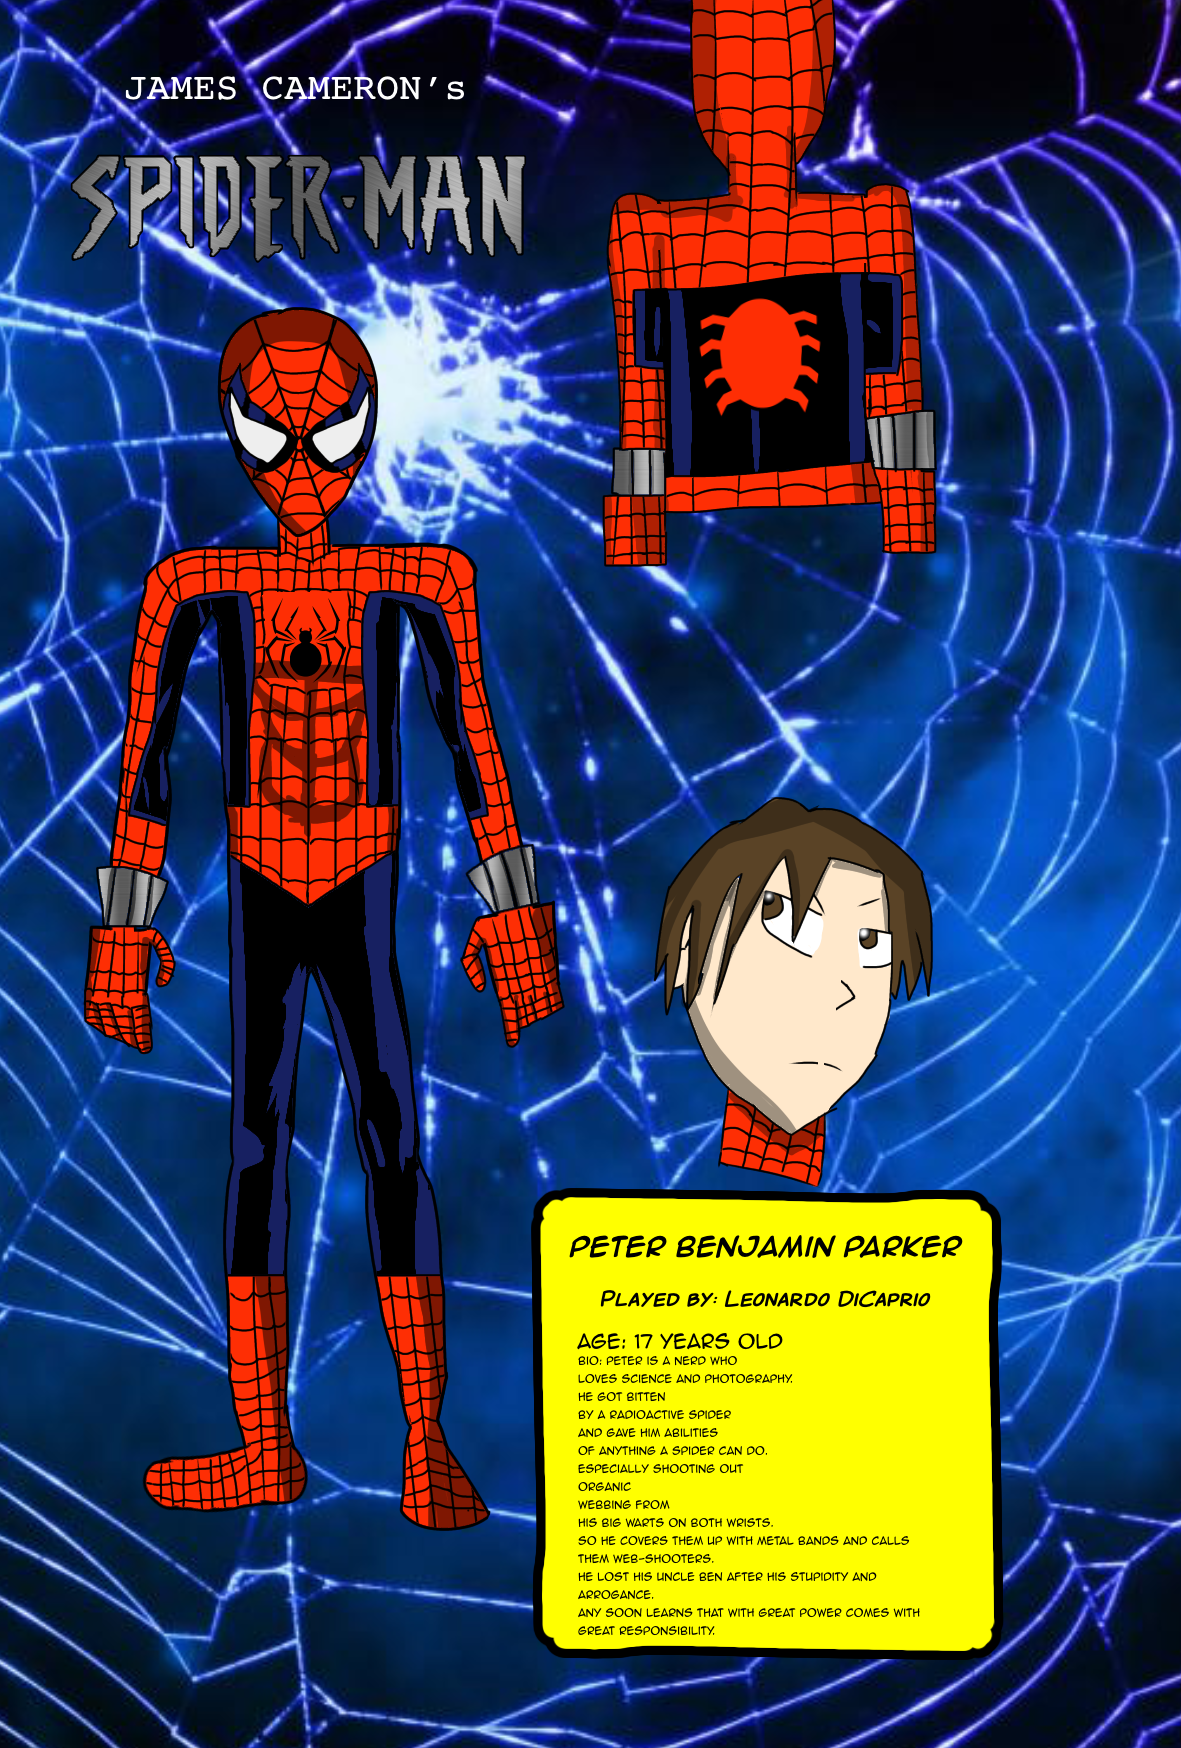 James Cameron Spider man concept art by SuperNovaComic on DeviantArt